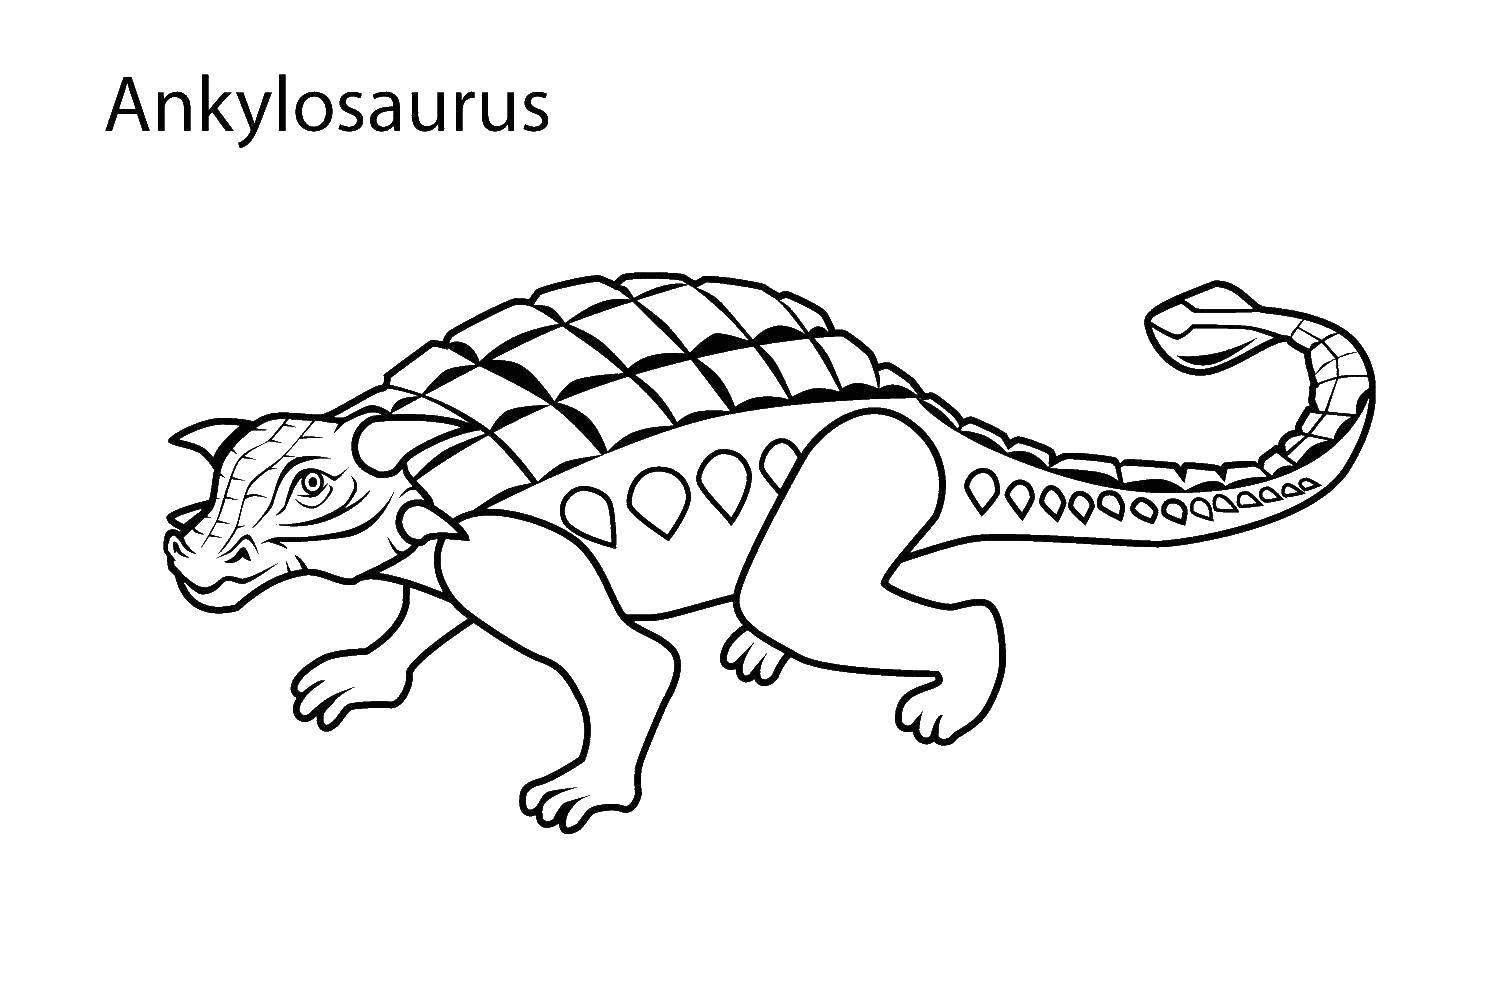 Coloring Herbivorous Ankylosaurus. Category dinosaur. Tags:  Dinosaurs , Ankylosaurus.